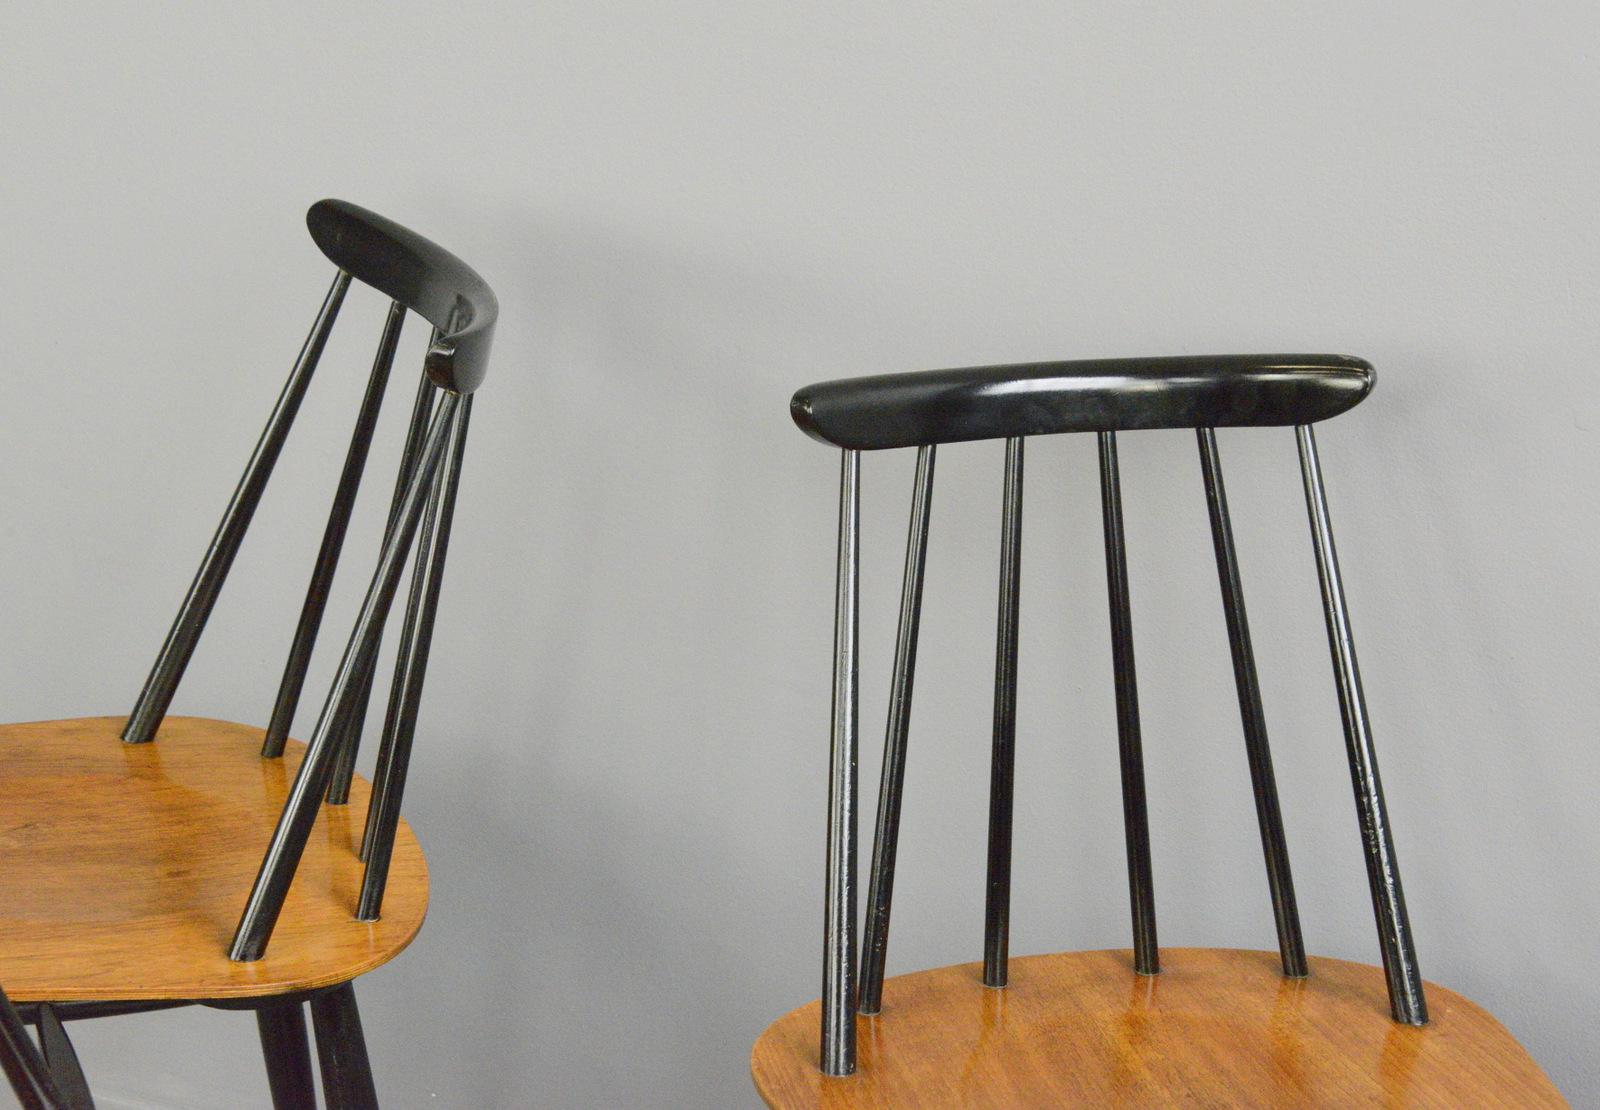 Dining chairs by Ilmari Tapiovaara Circa 1960s

- Black frames with teak ply seats
- Designed by Ilmari Tapiovaara
- Produced by Asko
- Finnish ~ 1960s
- Measures: 46cm wide x 43cm deep x 79cm tall
- 45cm seat height

Ilmari